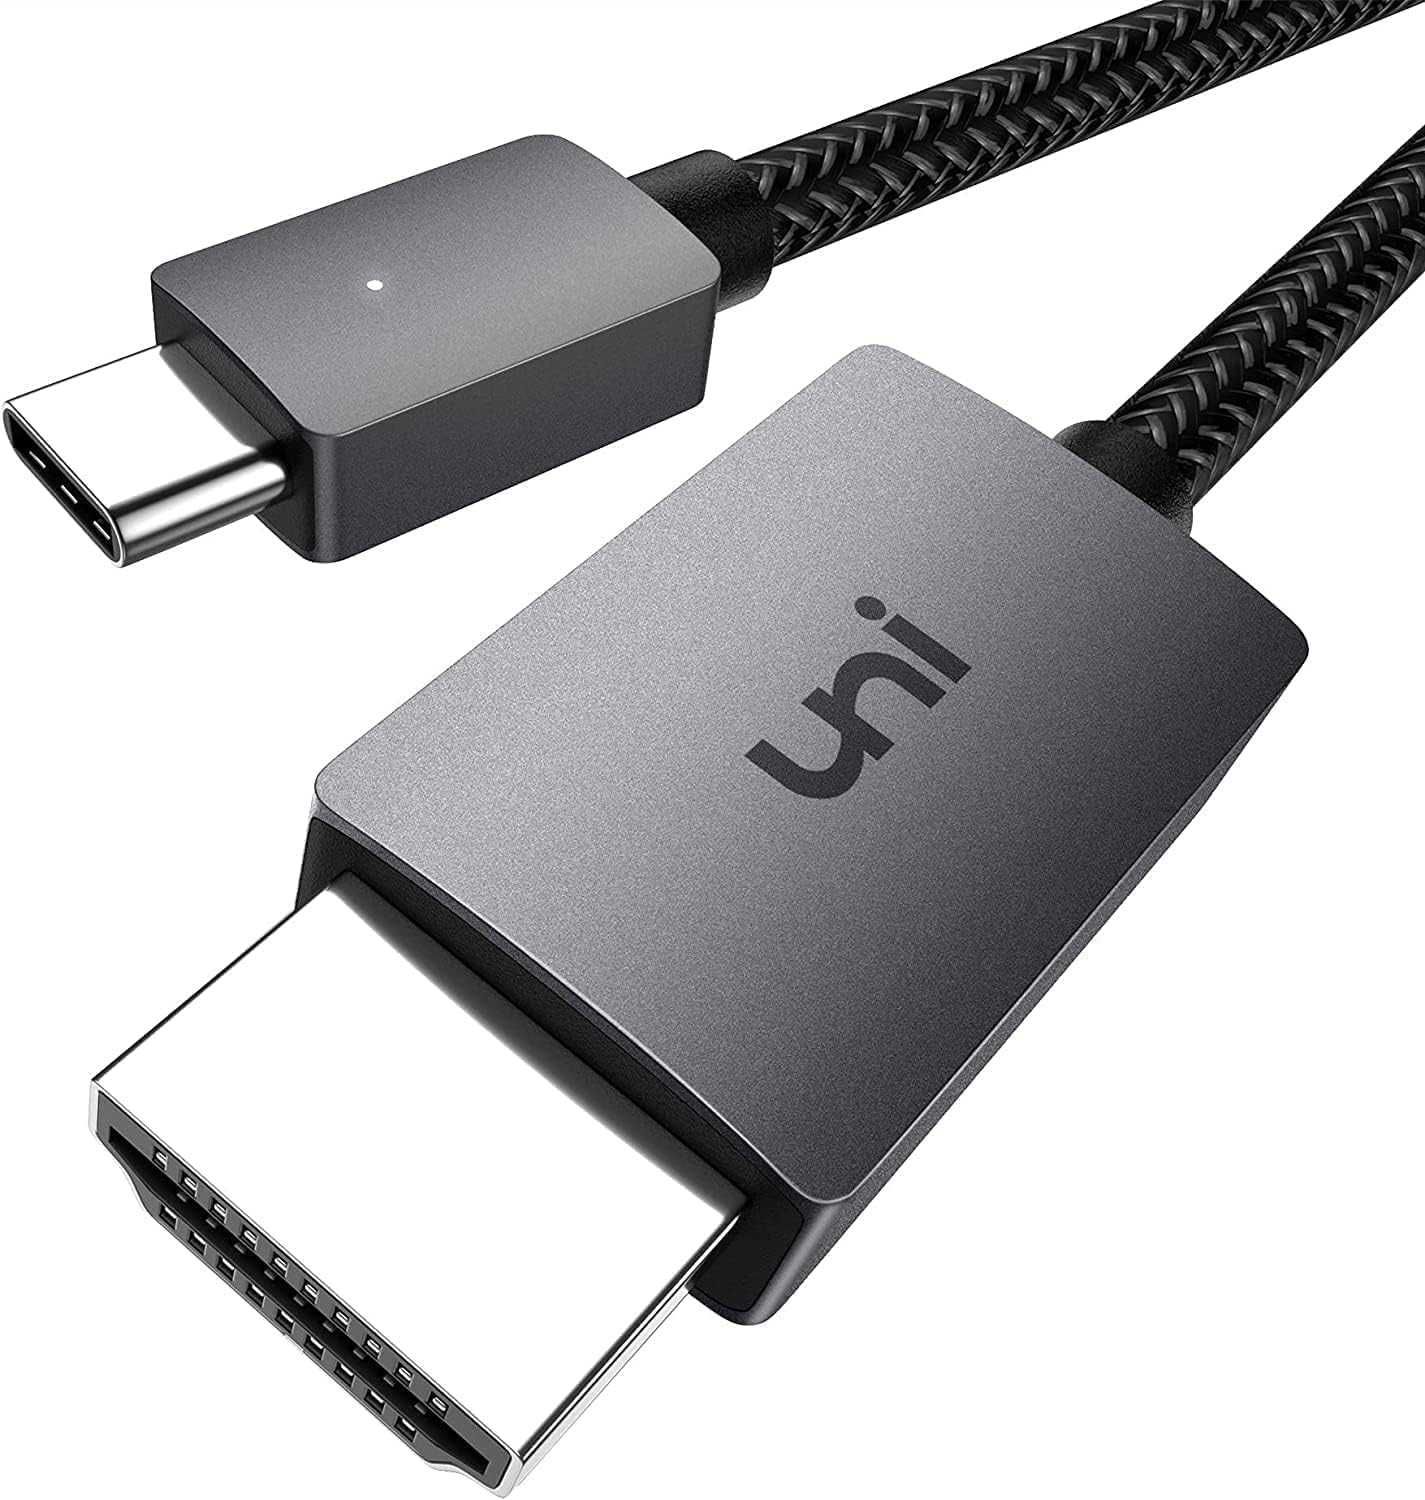 UNI Kabel USB C do HDMI 4K 1.8 m